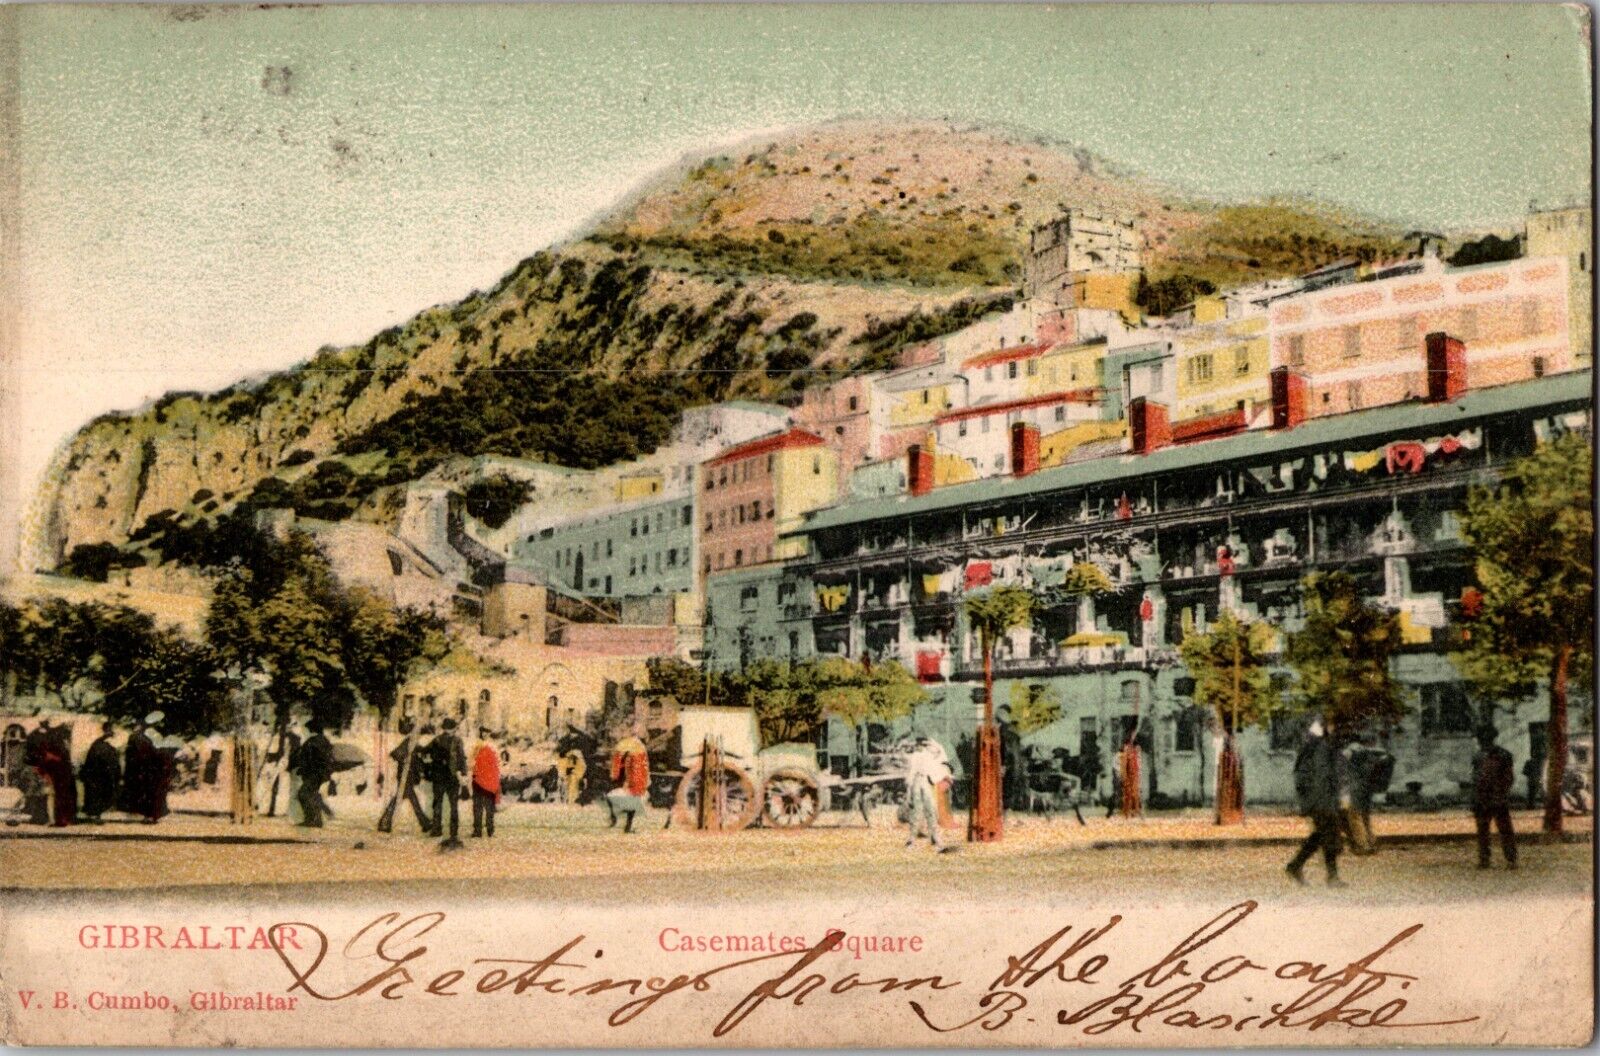 1906 Vintage Postcard Gibraltar Casemates Square - Peoria Illinois Postmark